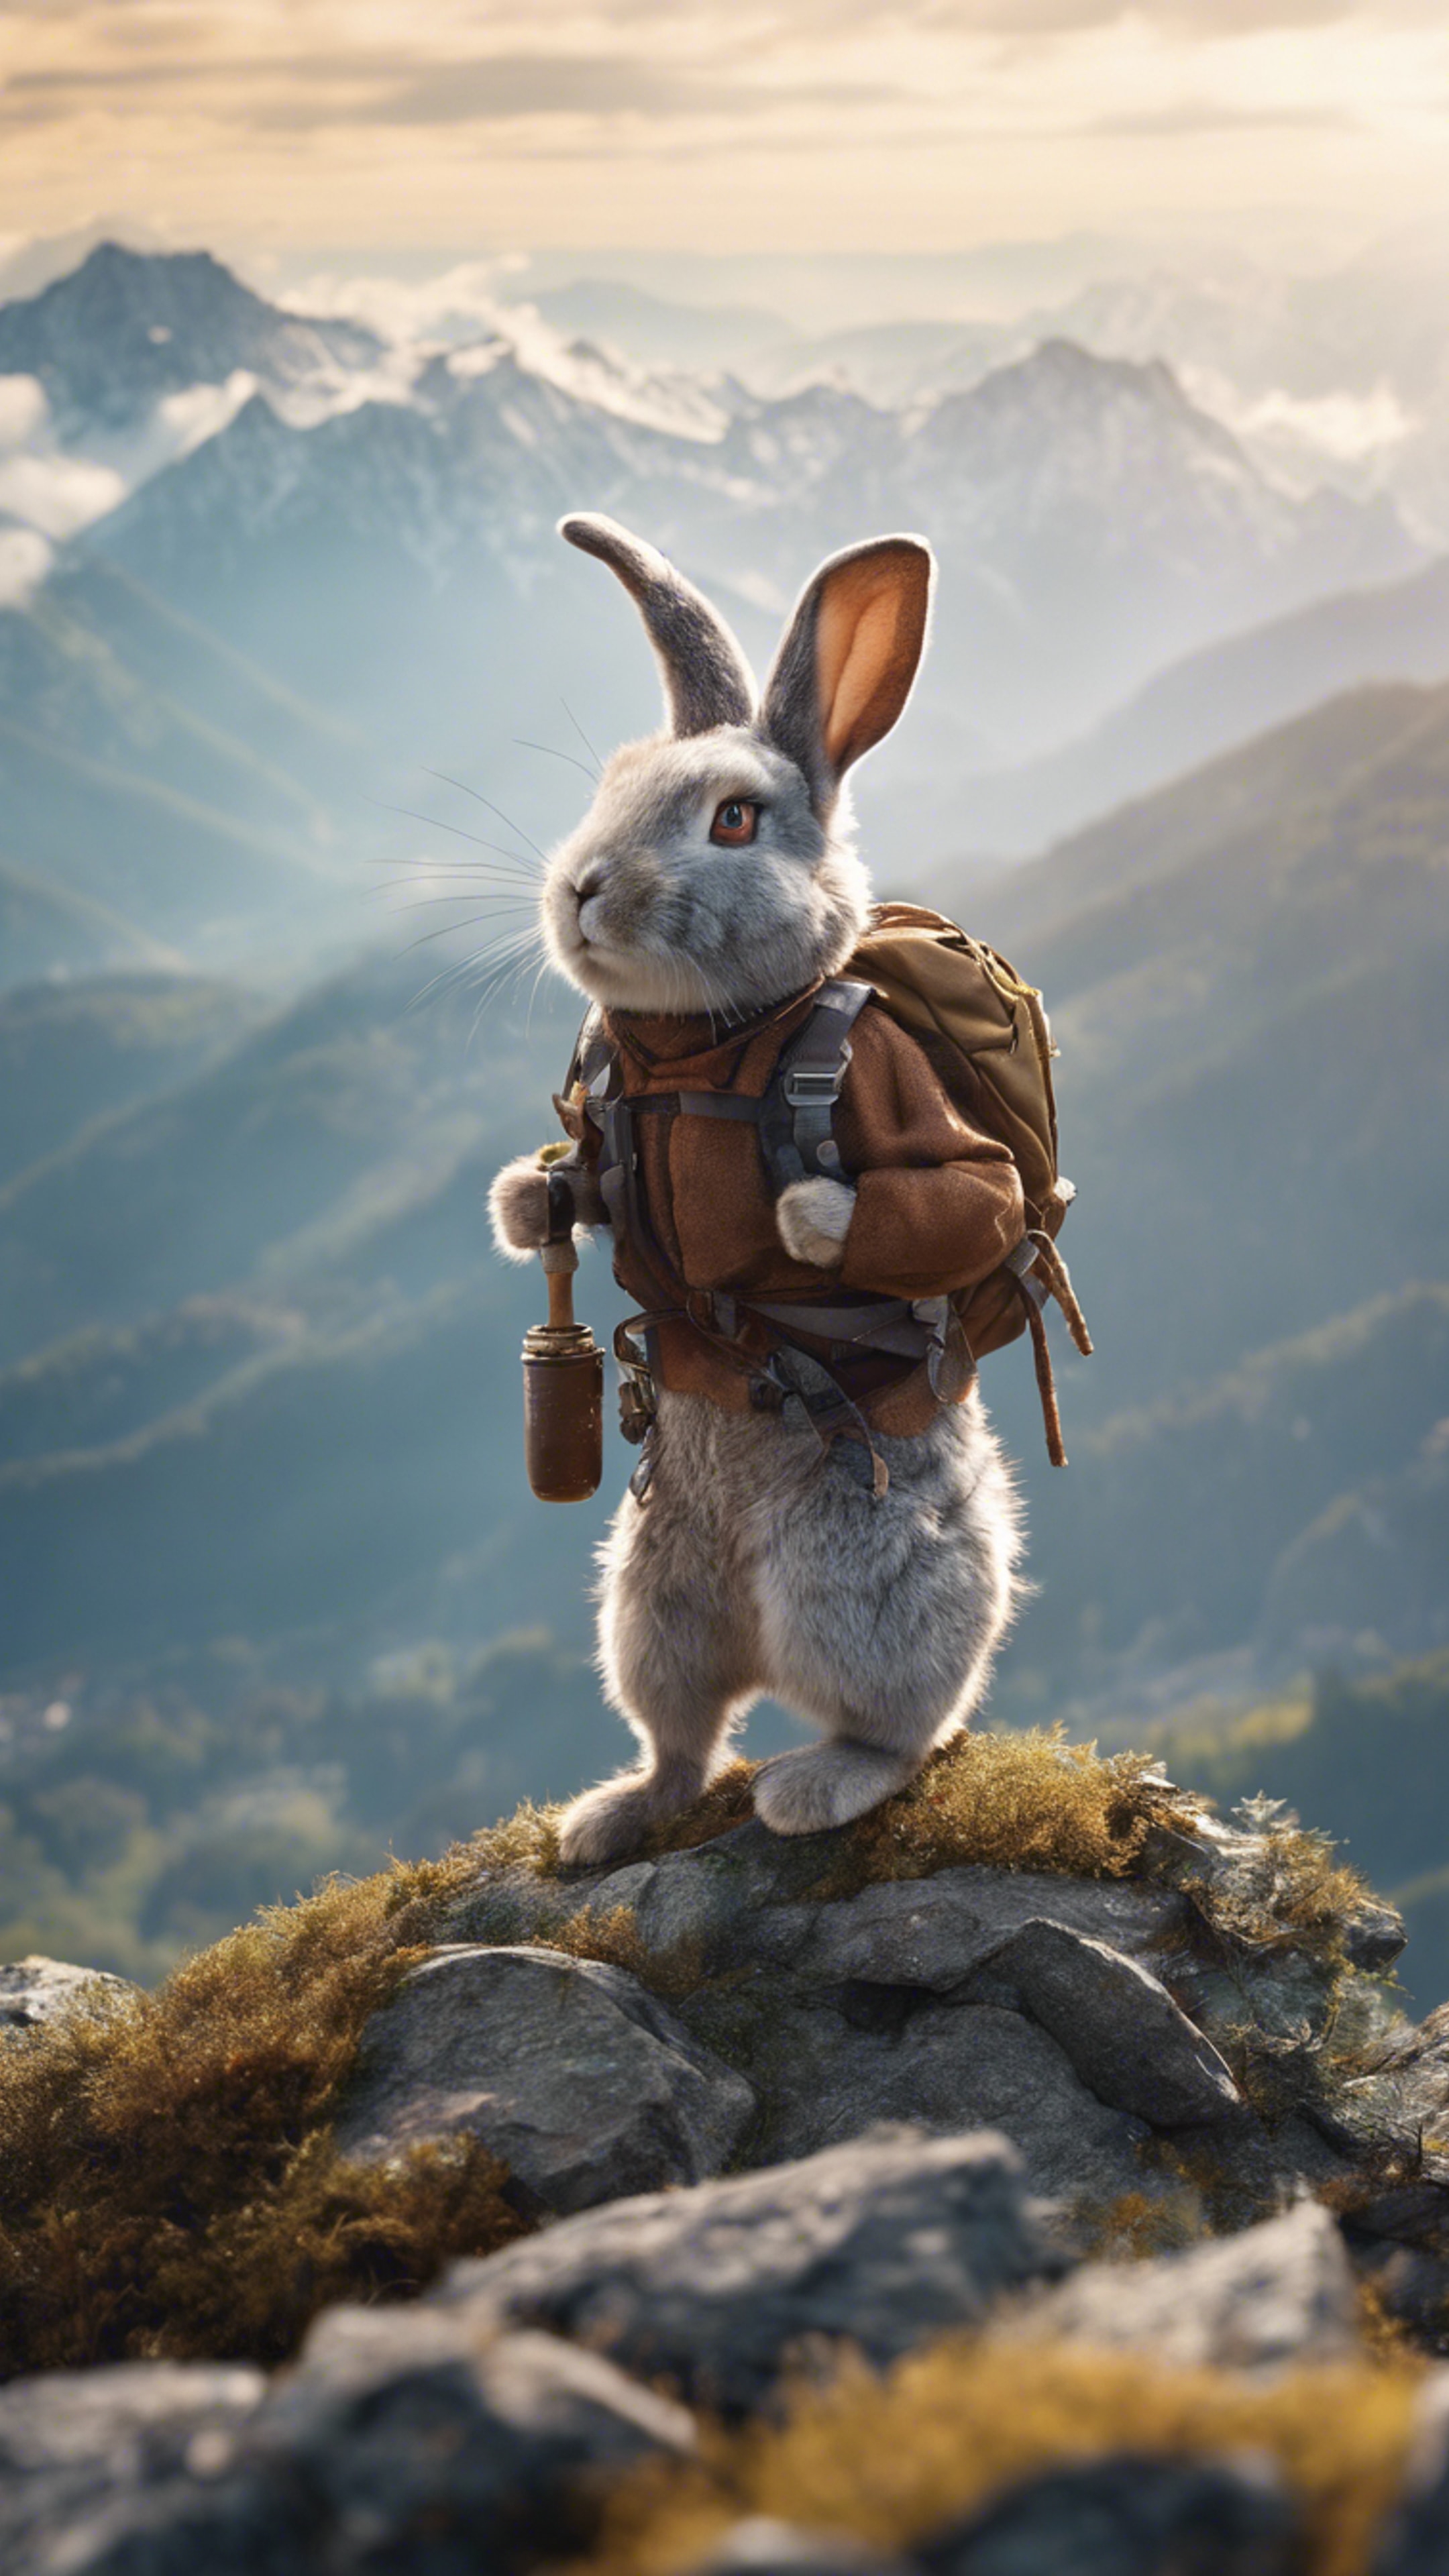 A Rabbit mountaineer conquering a treacherous peak. Шпалери[faadaab6eec04e17a877]